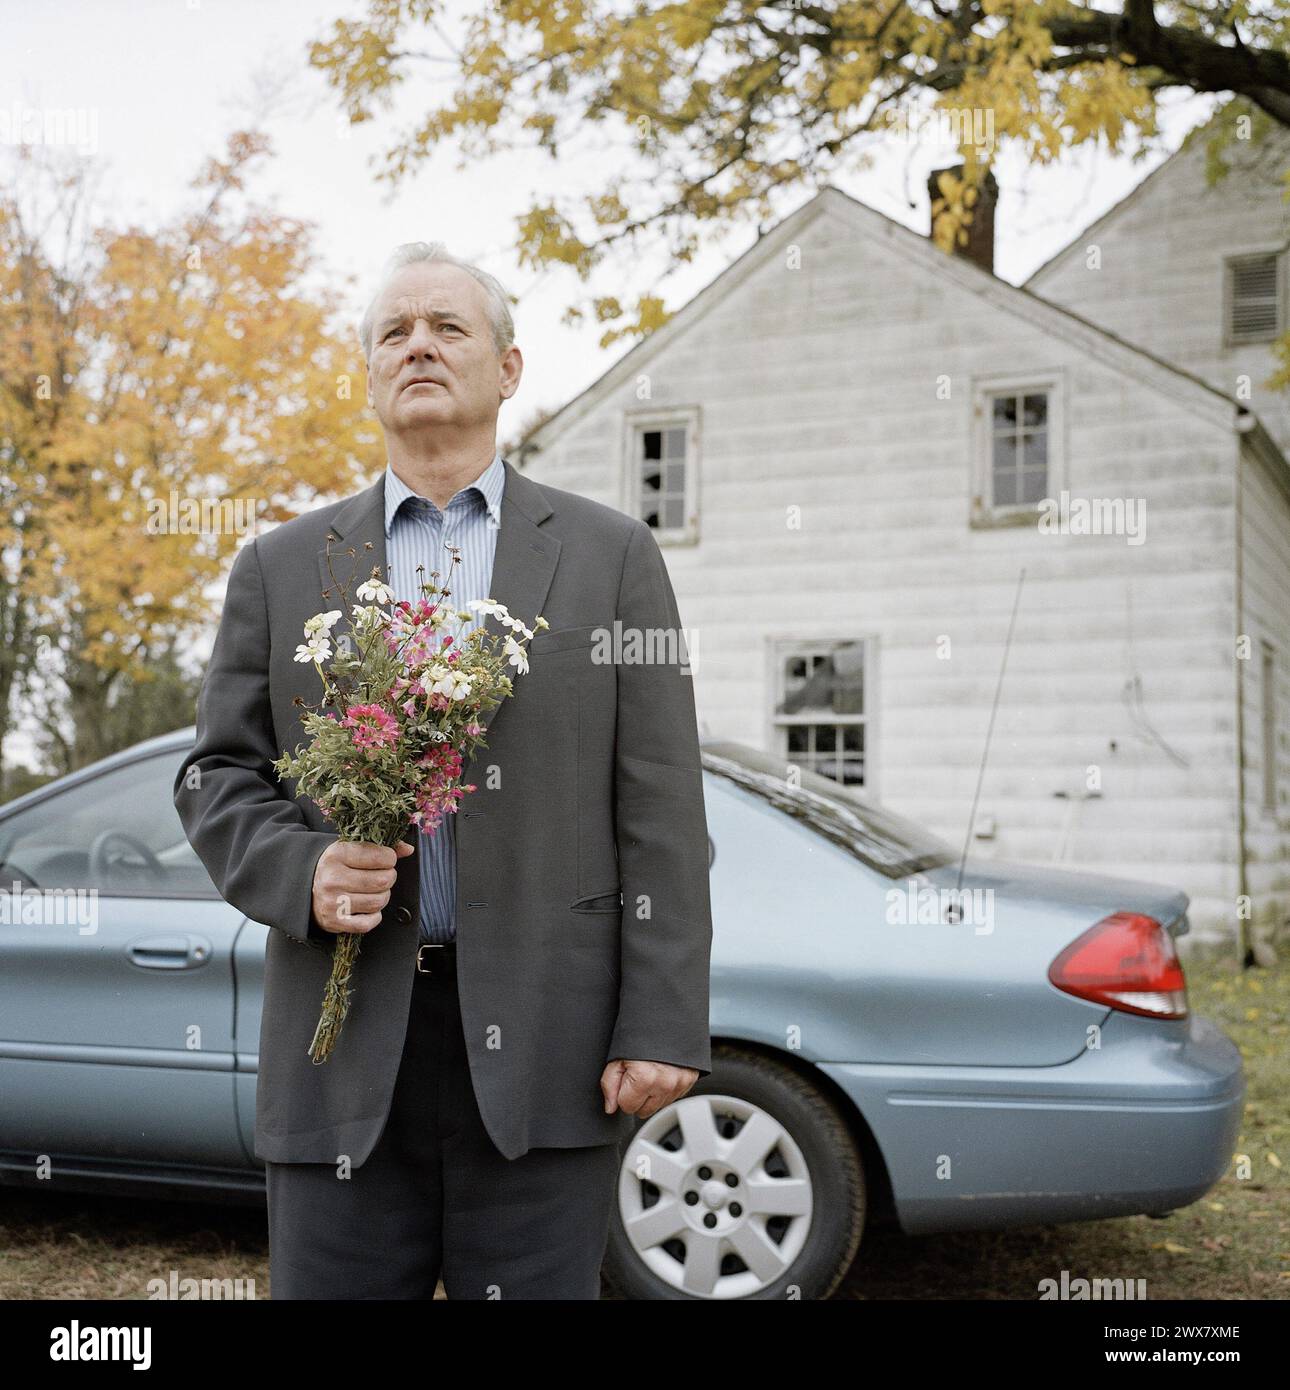 Broken Flowers  Year: 2005 USA Bill Murray  Director: Jim Jarmusch Stock Photo